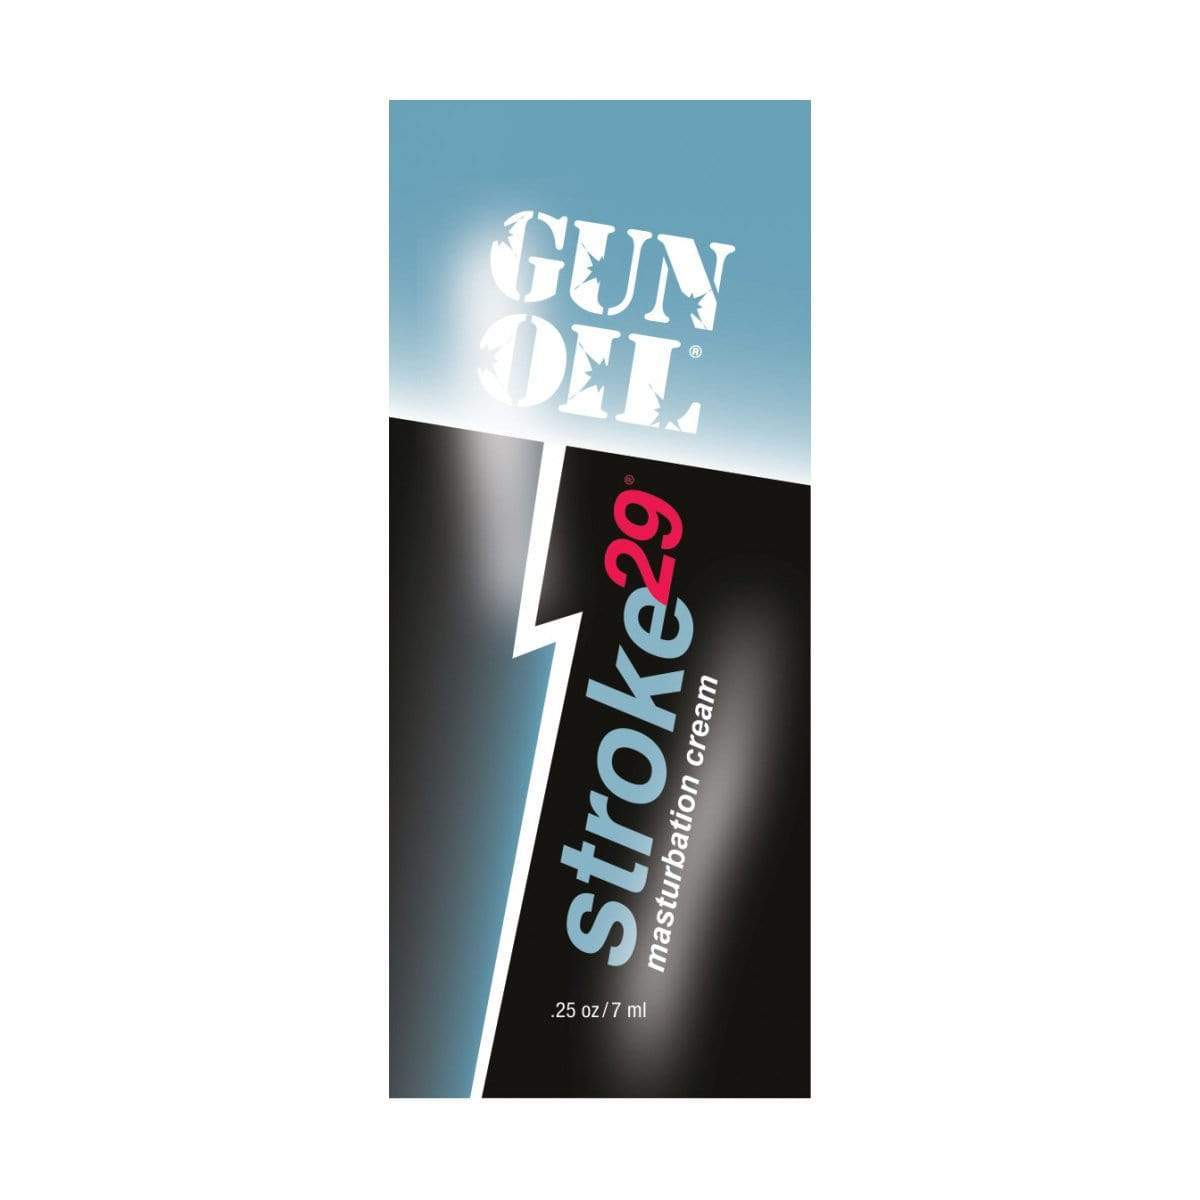 Gun Oil - Stroke 29 Masturbation Cream 7ml Lube (Silicone Based) 318339116 CherryAffairs